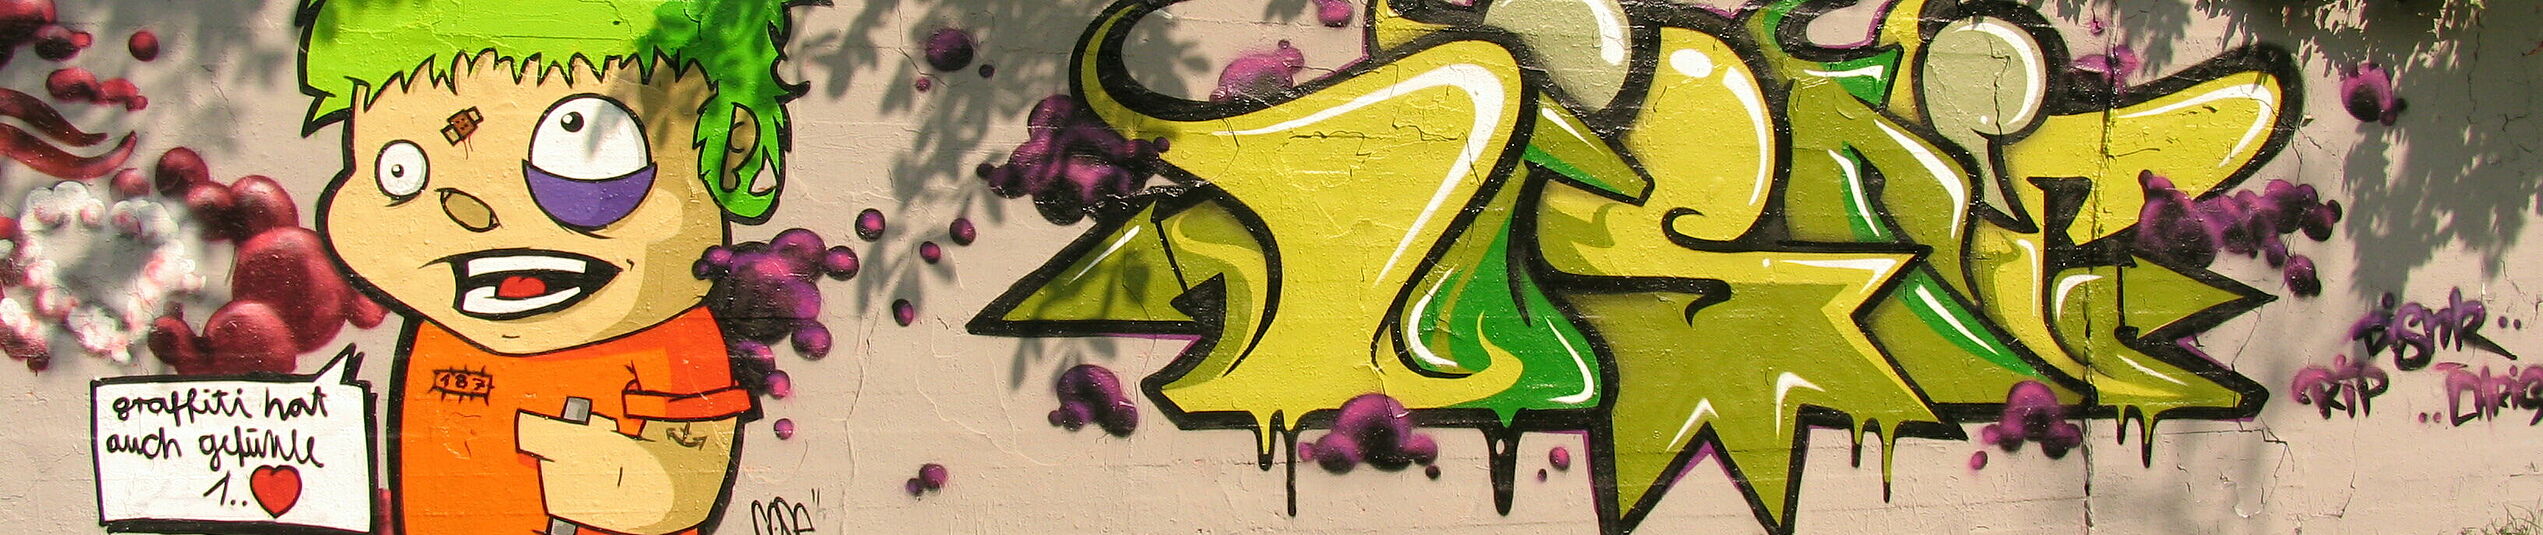 Graffiti "graffiti hat auch gefühle"